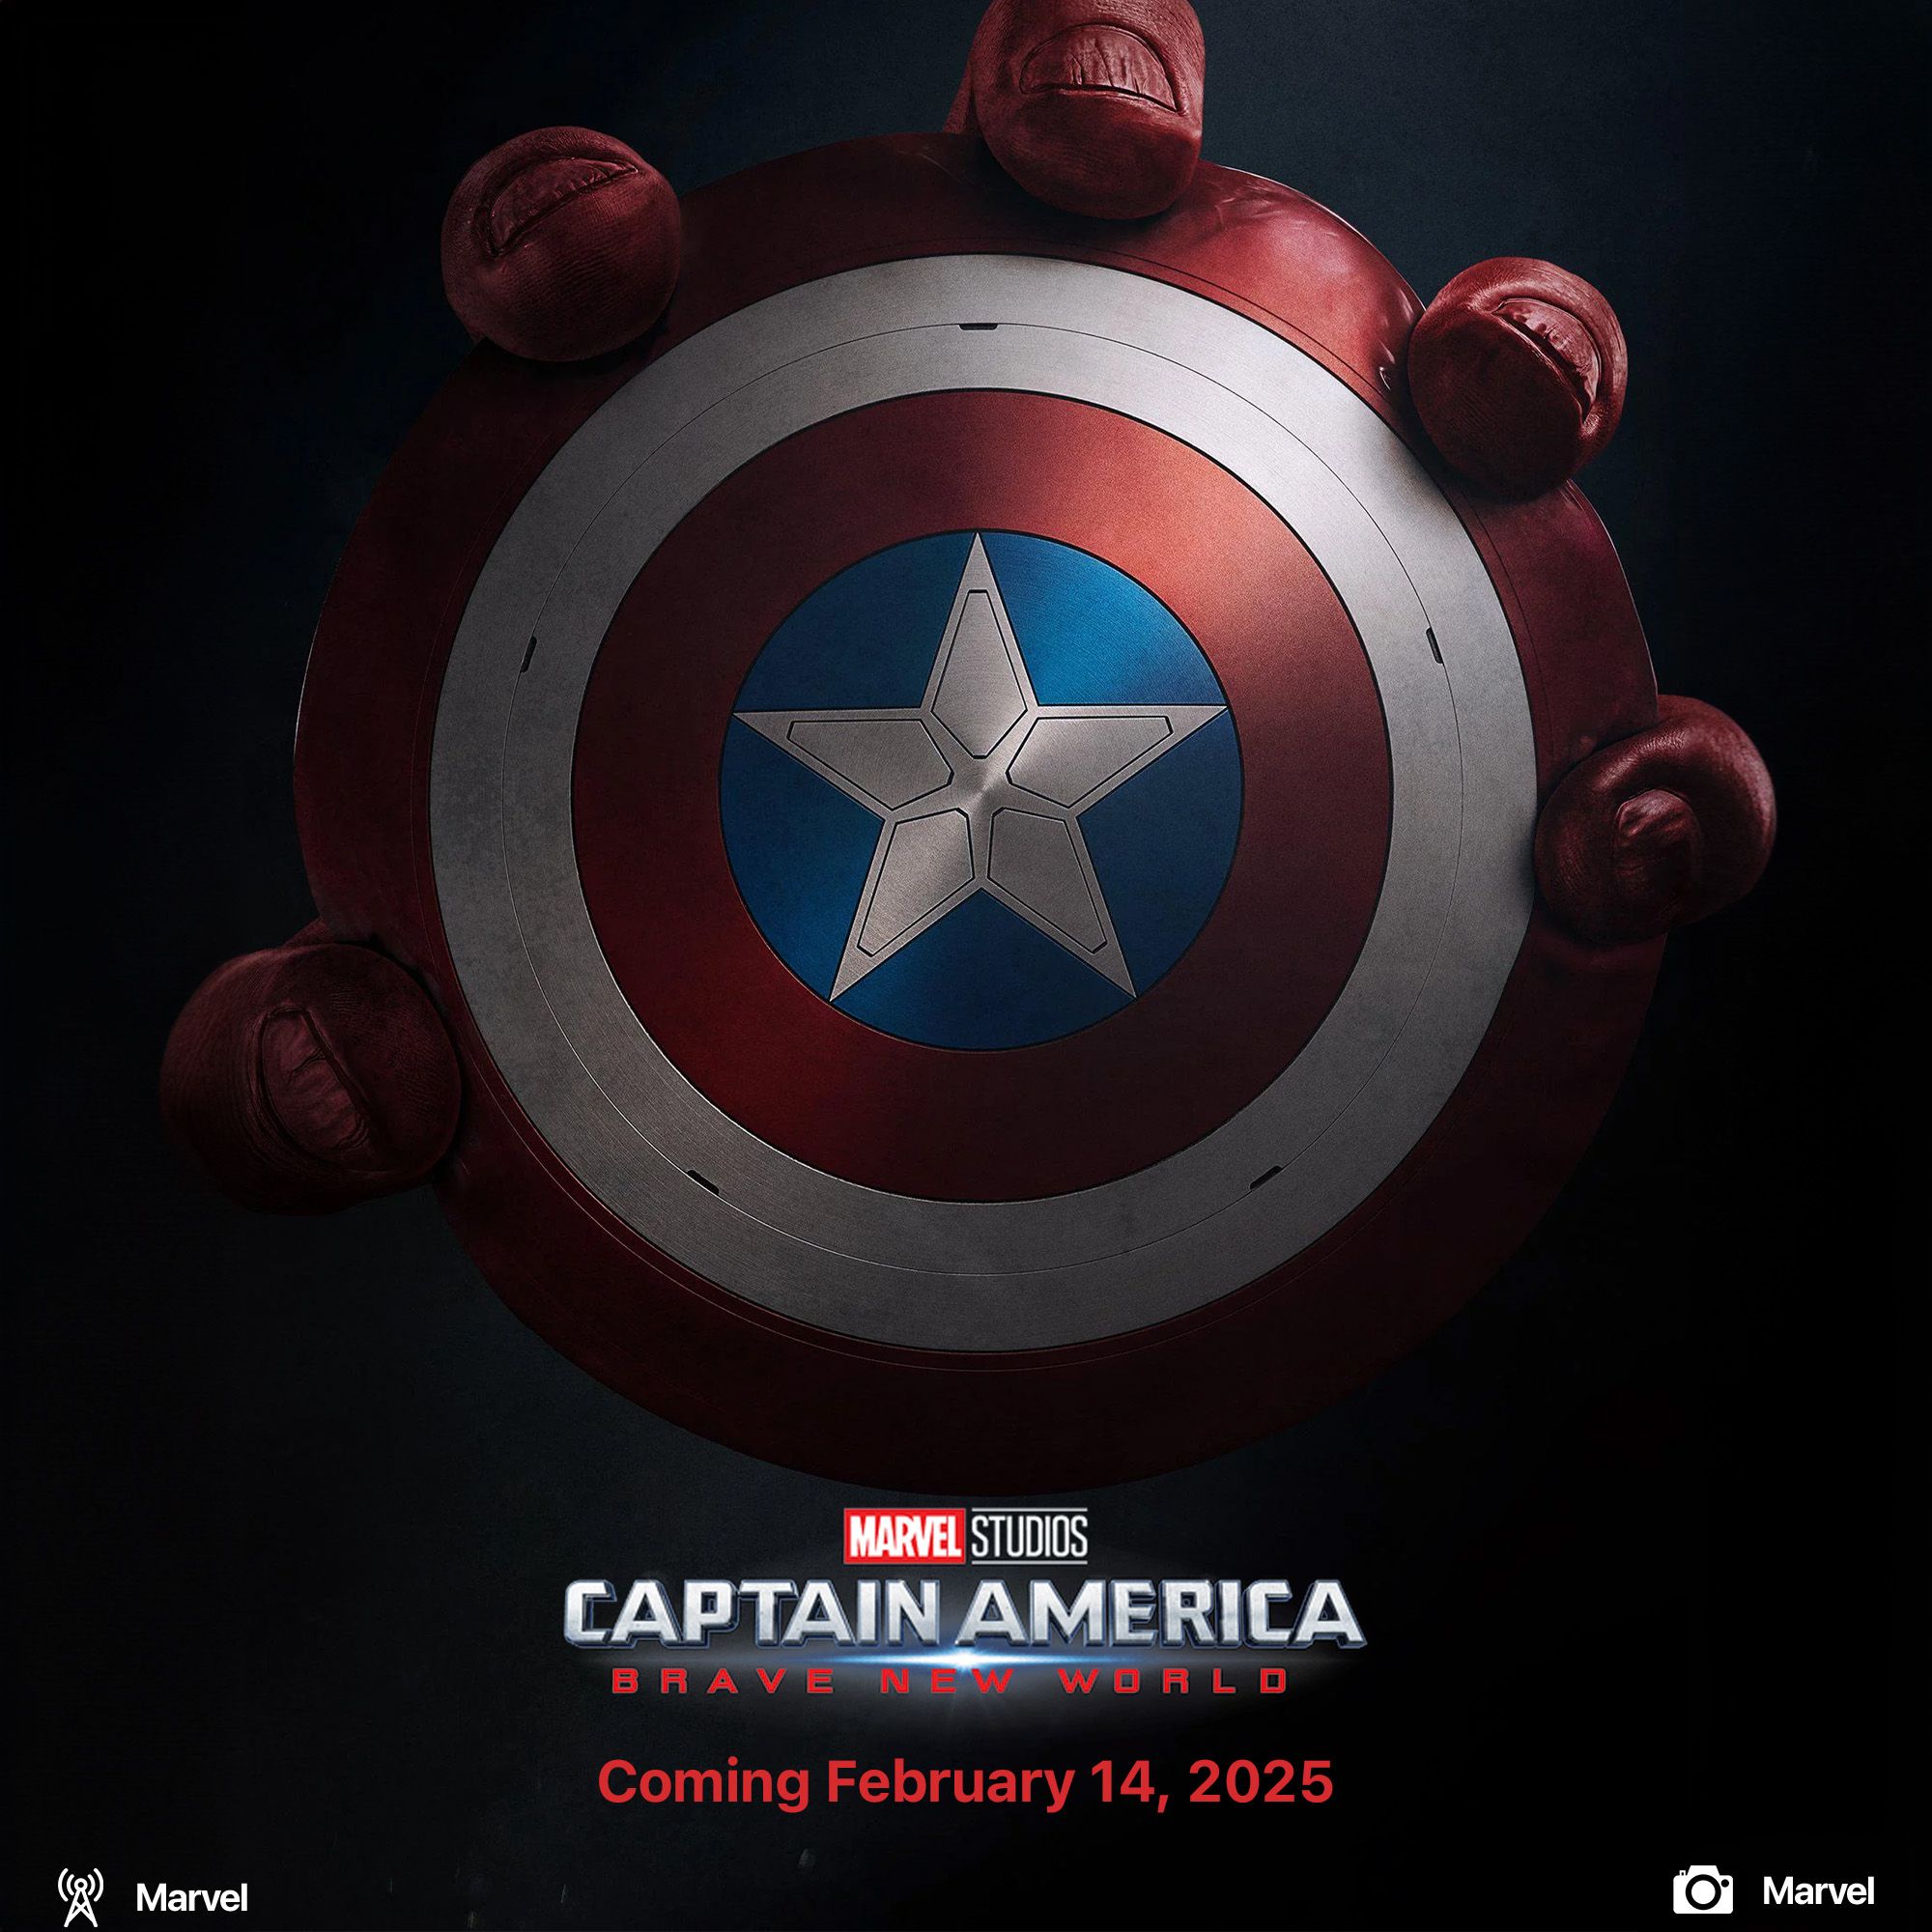 Marvel's Captain America Brave New World coming February 14th 2025